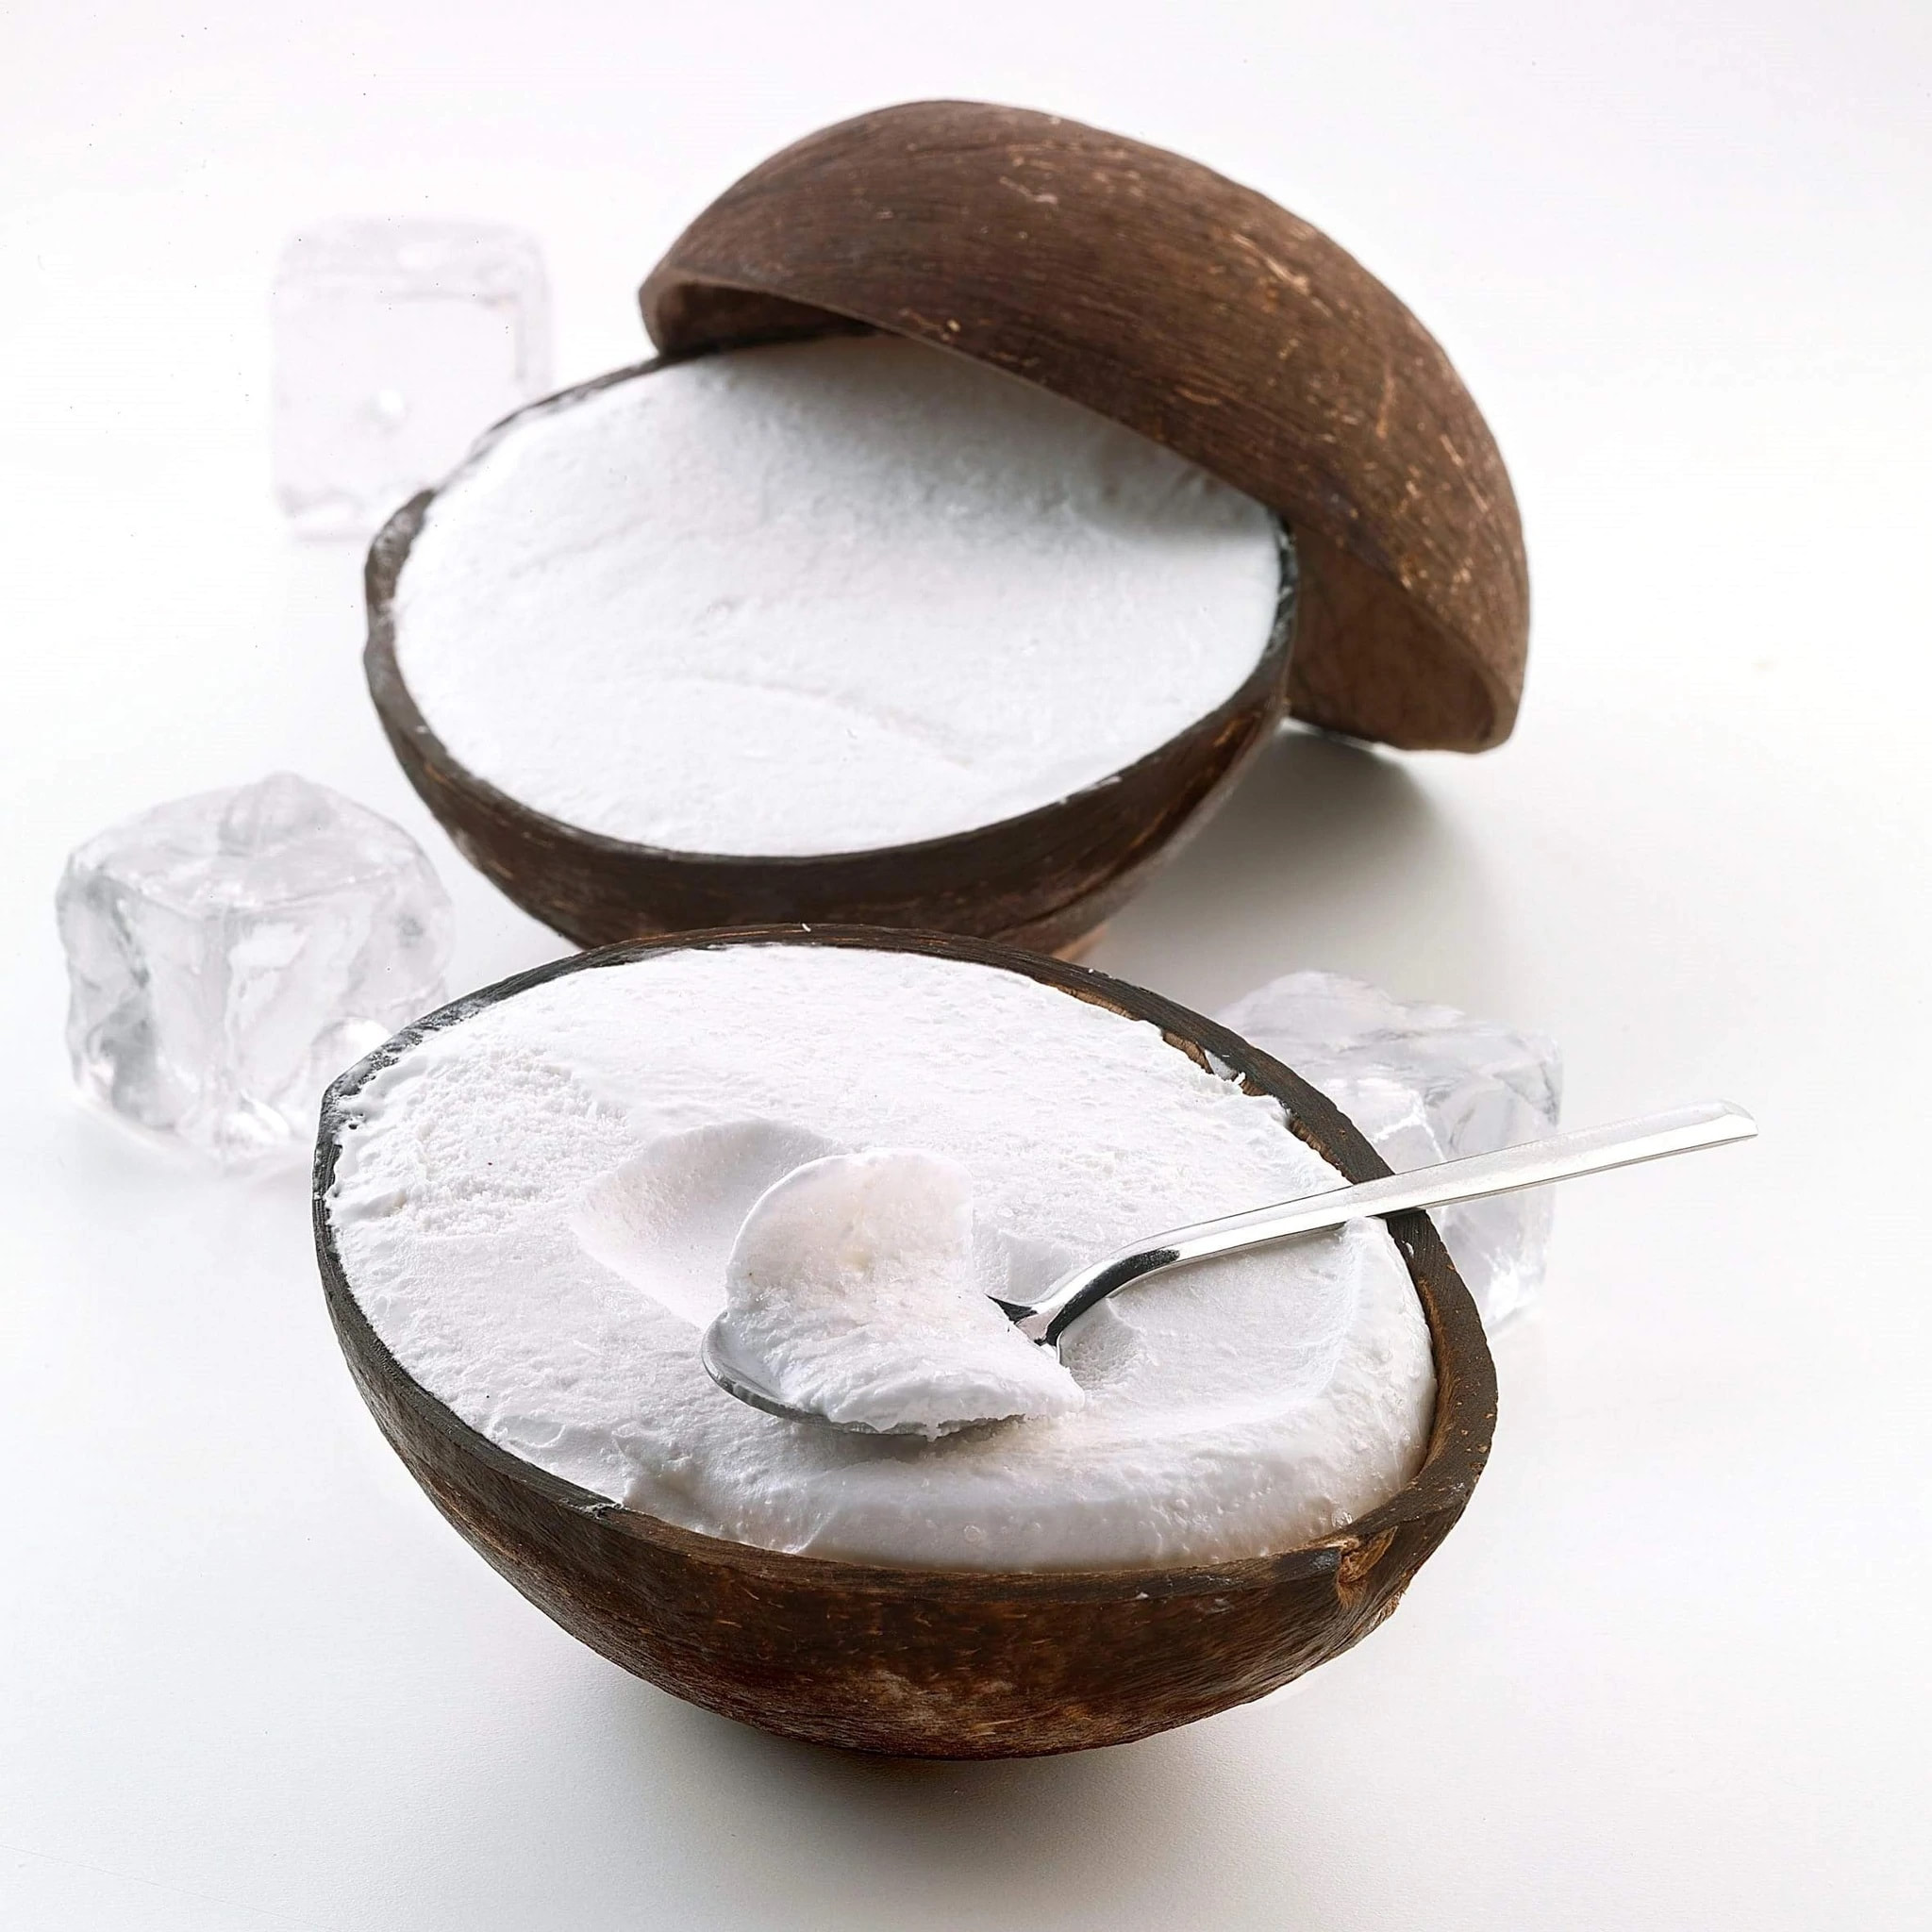 Entertainment Shetland sneeze 🇮🇹 Coconut 'Sorbetto Ripieno' Sorbet by Bindi, 4.4 oz [Frozen] ❄️ | F R E  N C H E R Y